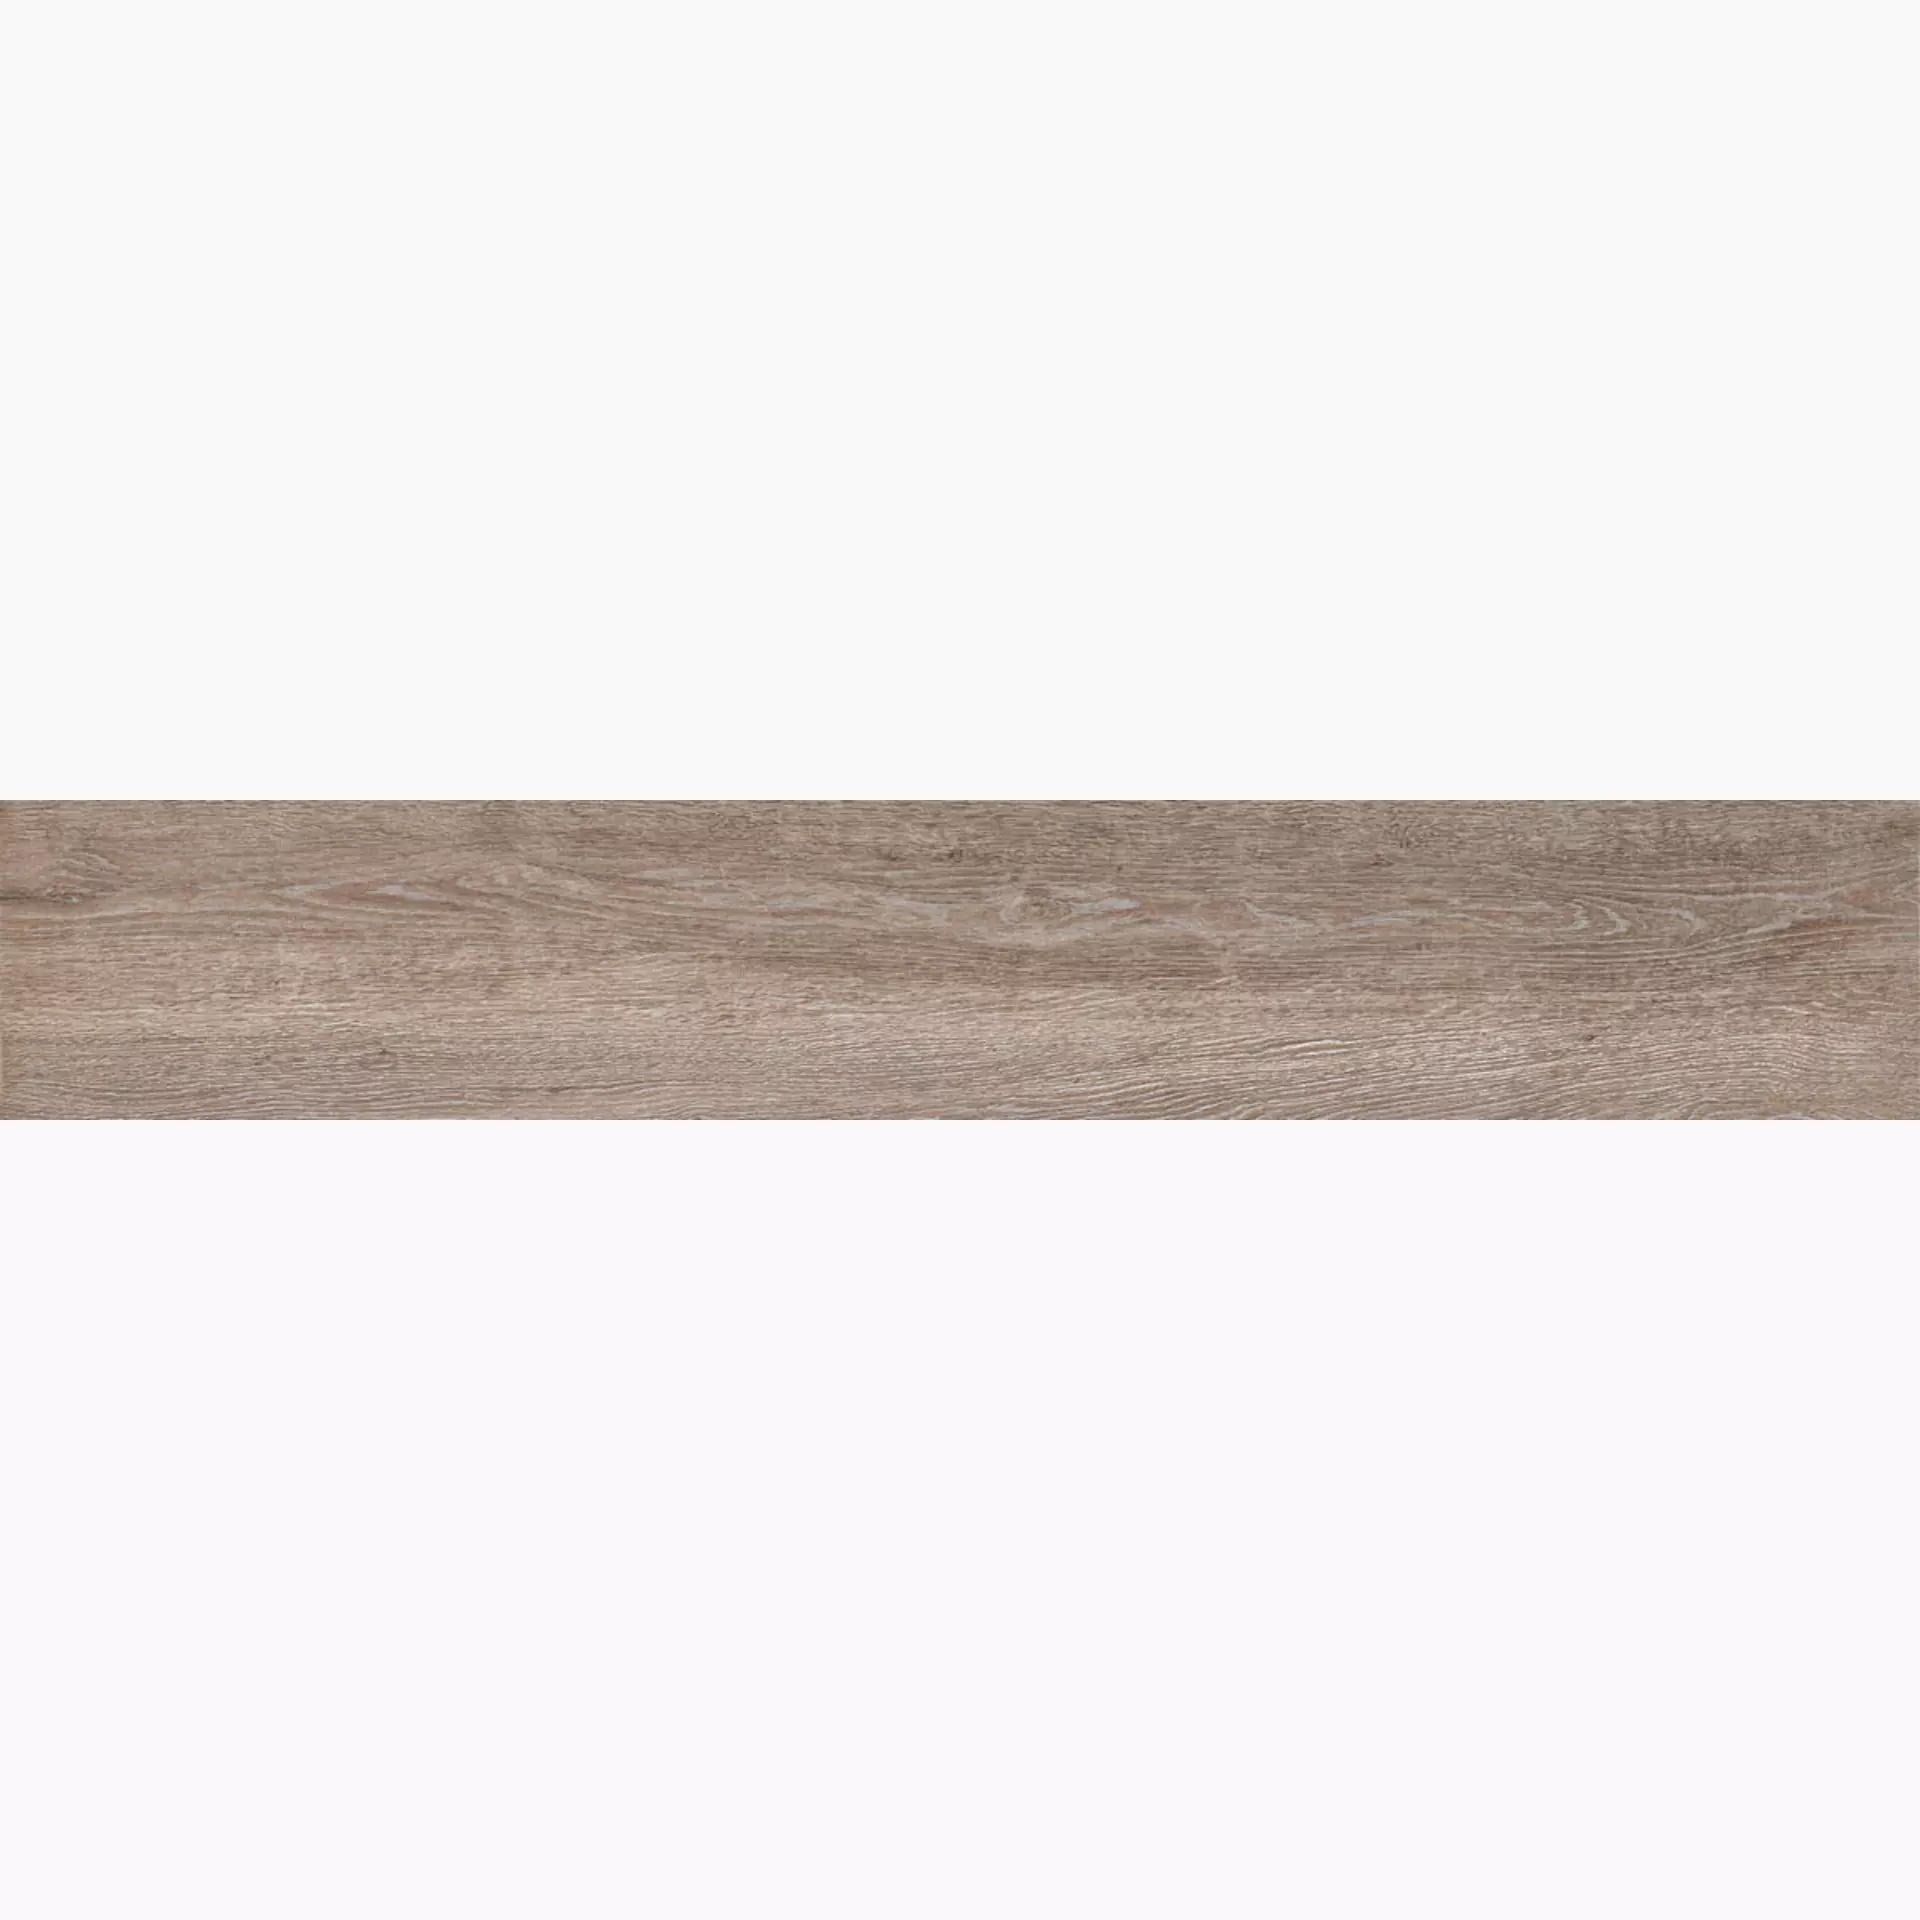 La Faenza Legno Brown Natural Slate Cut Matt 181685 30x180cm rectified 10mm - LEGNO 3018T RM